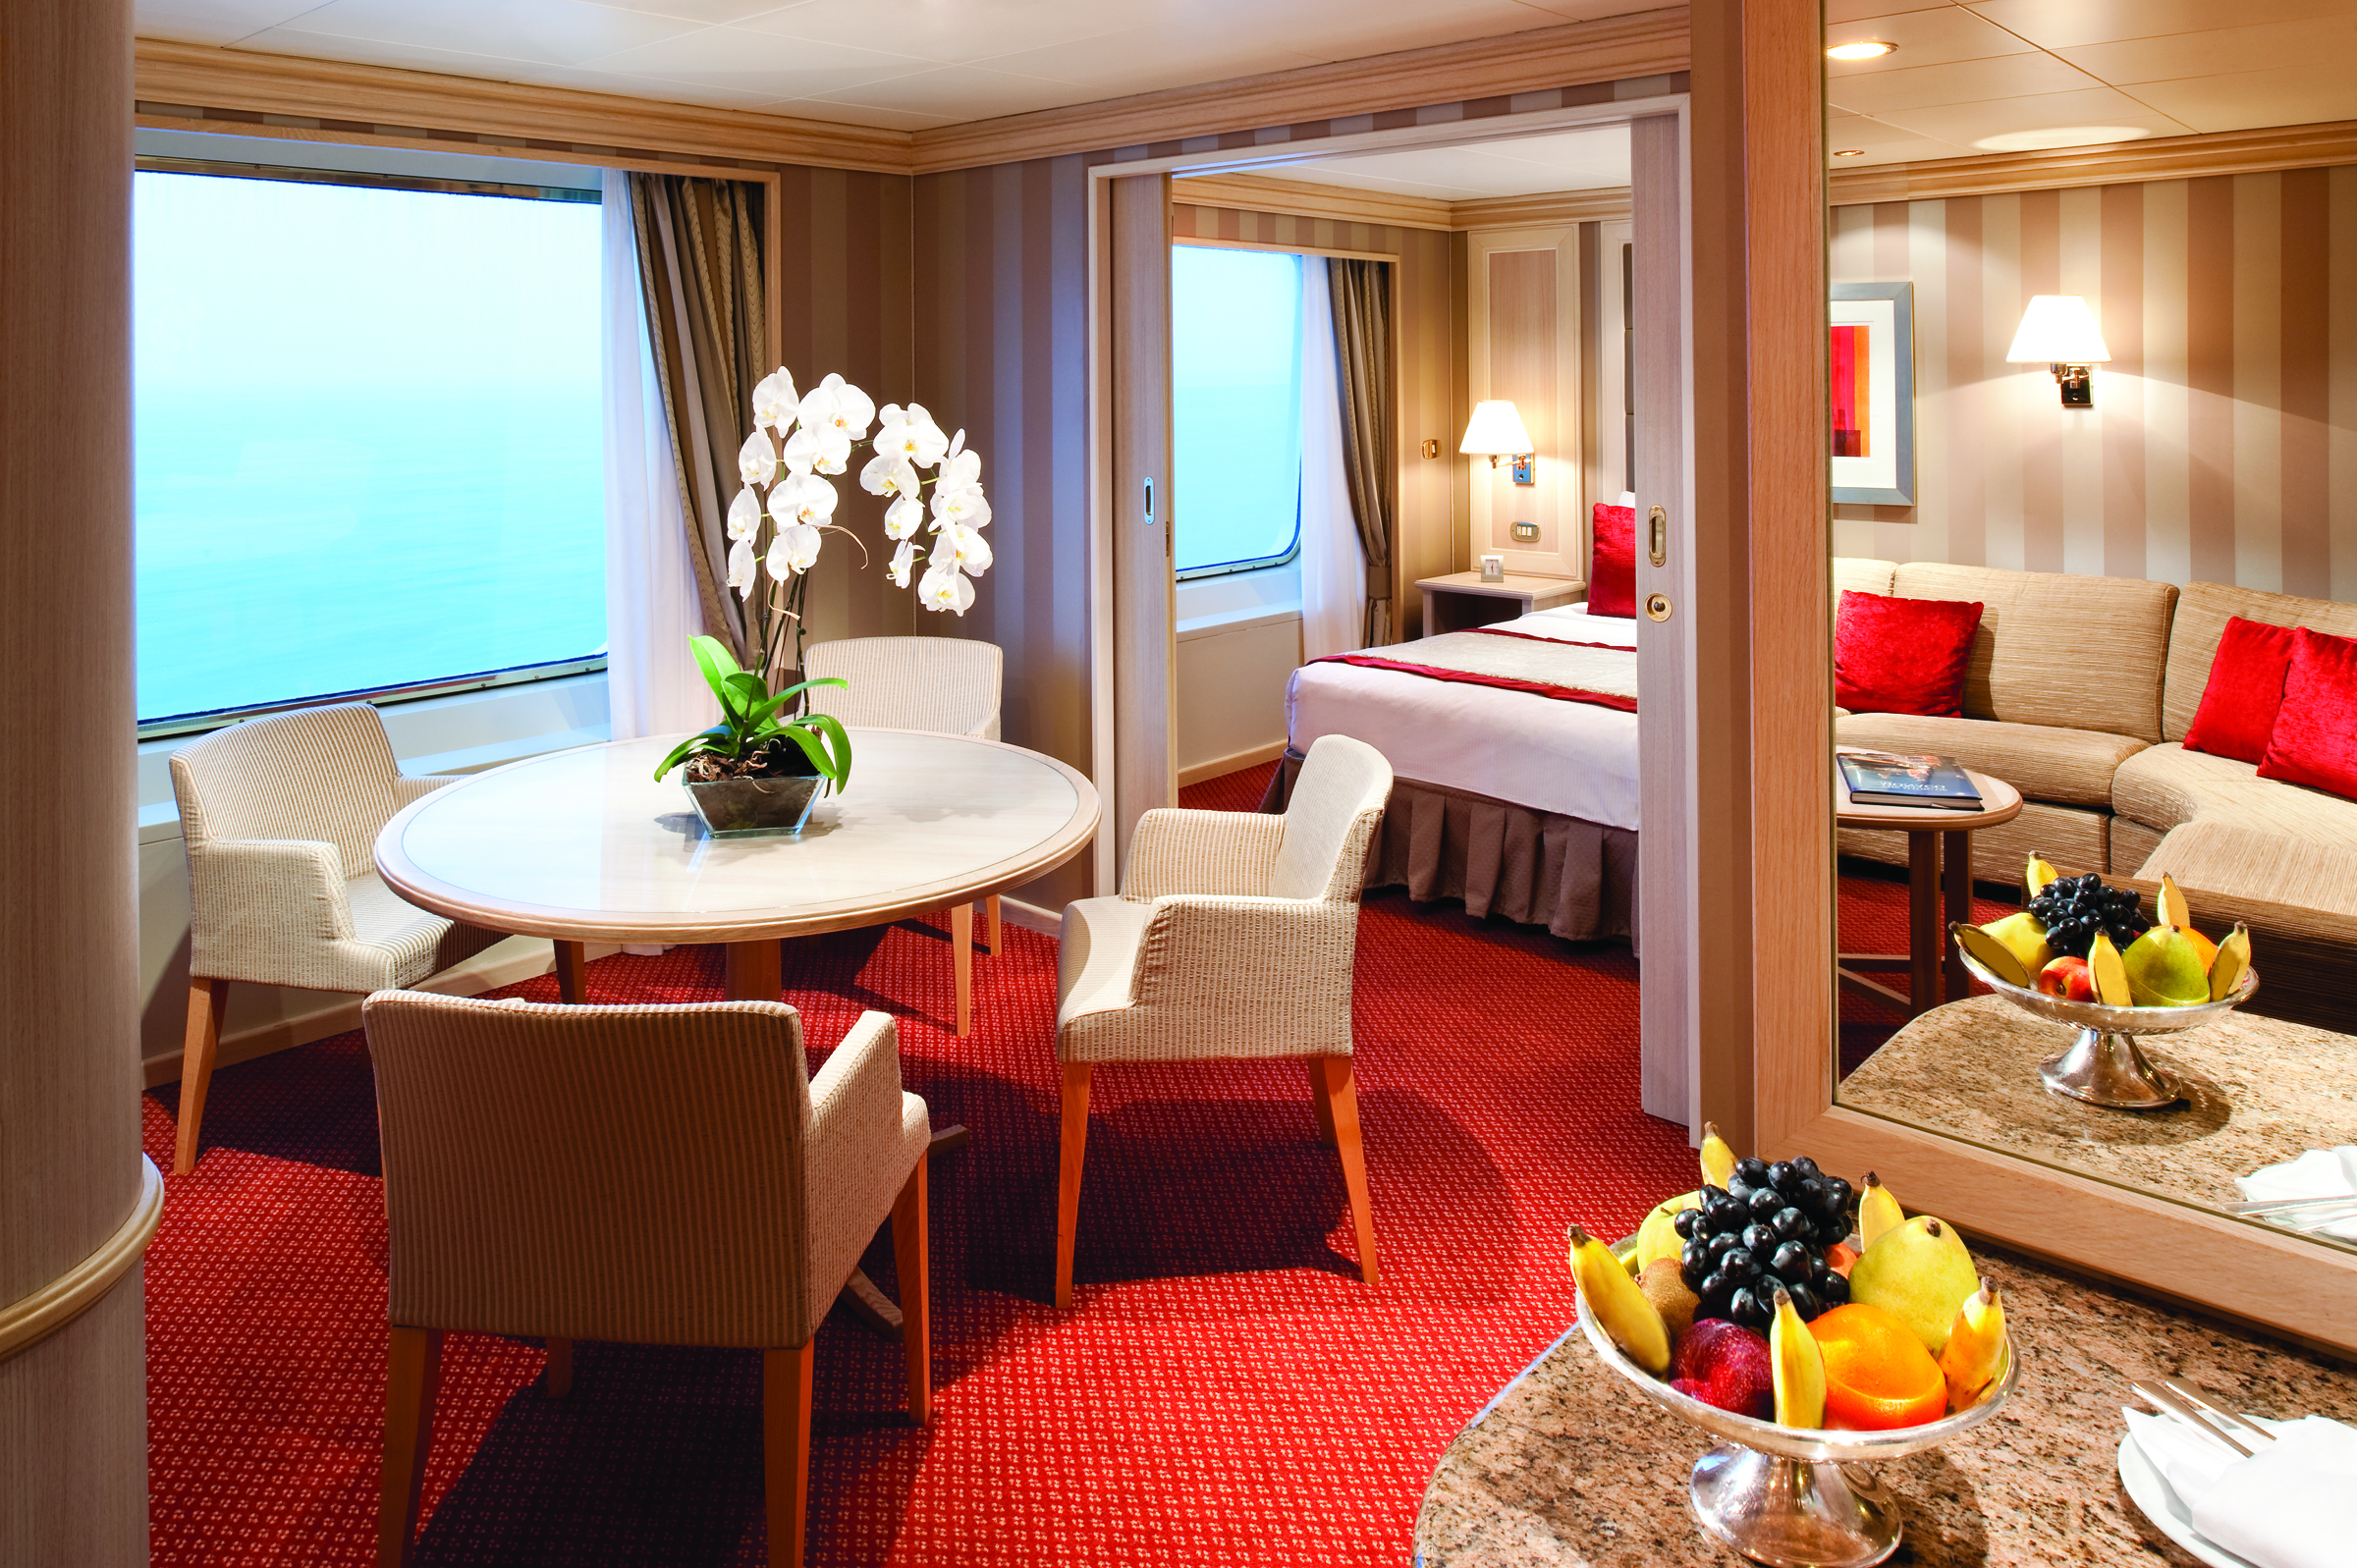 Medallion Suite Room #741 - Deck 7 Midship Silver Wind - Silversea Cruises